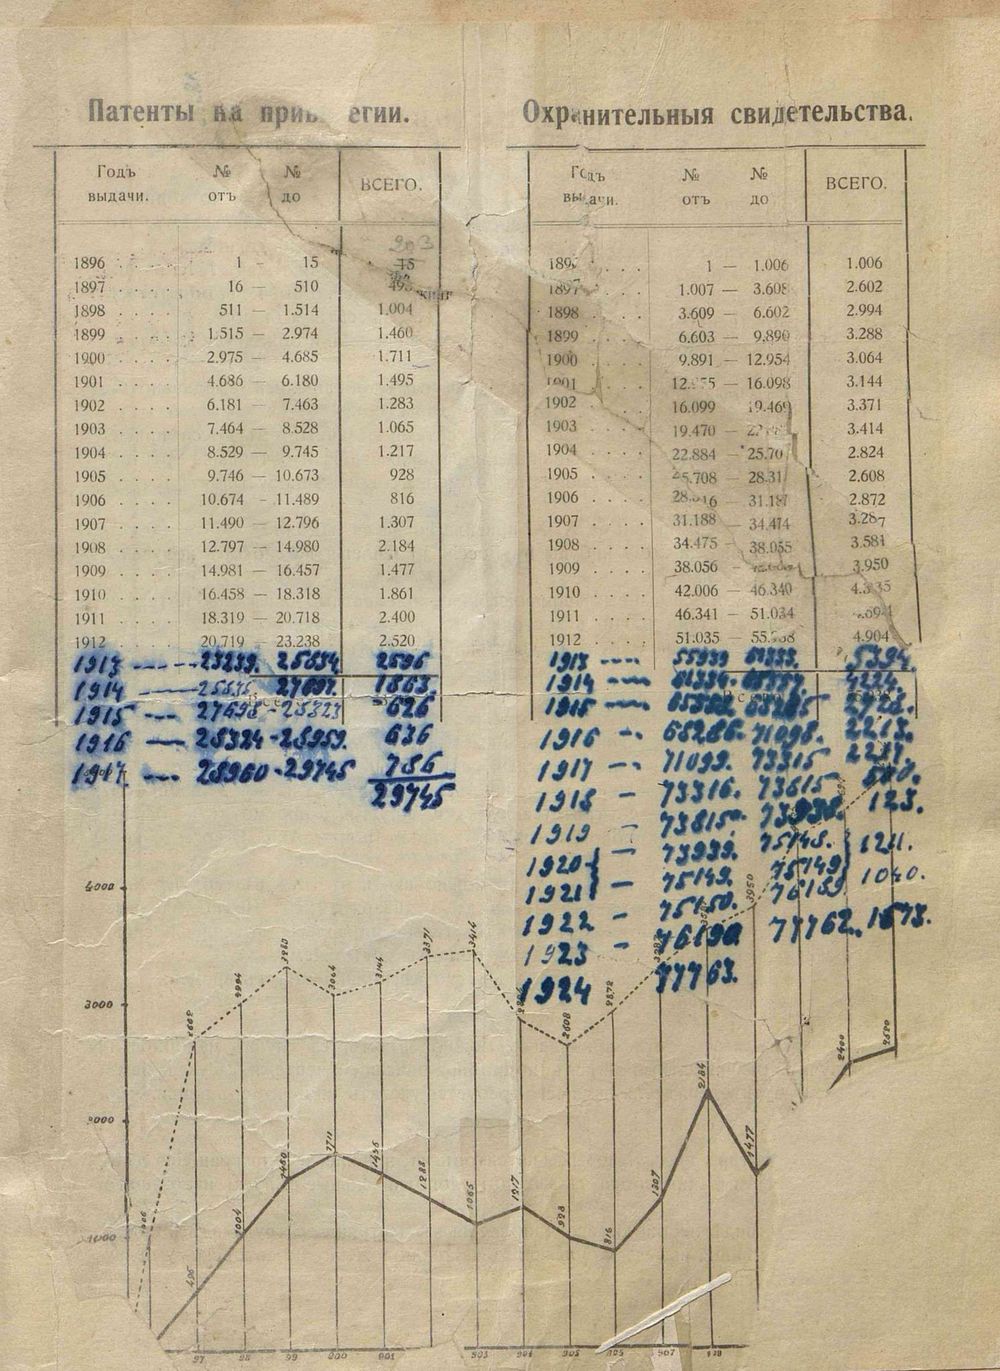 1917-Rosenzweig-patent-counts.jpeg